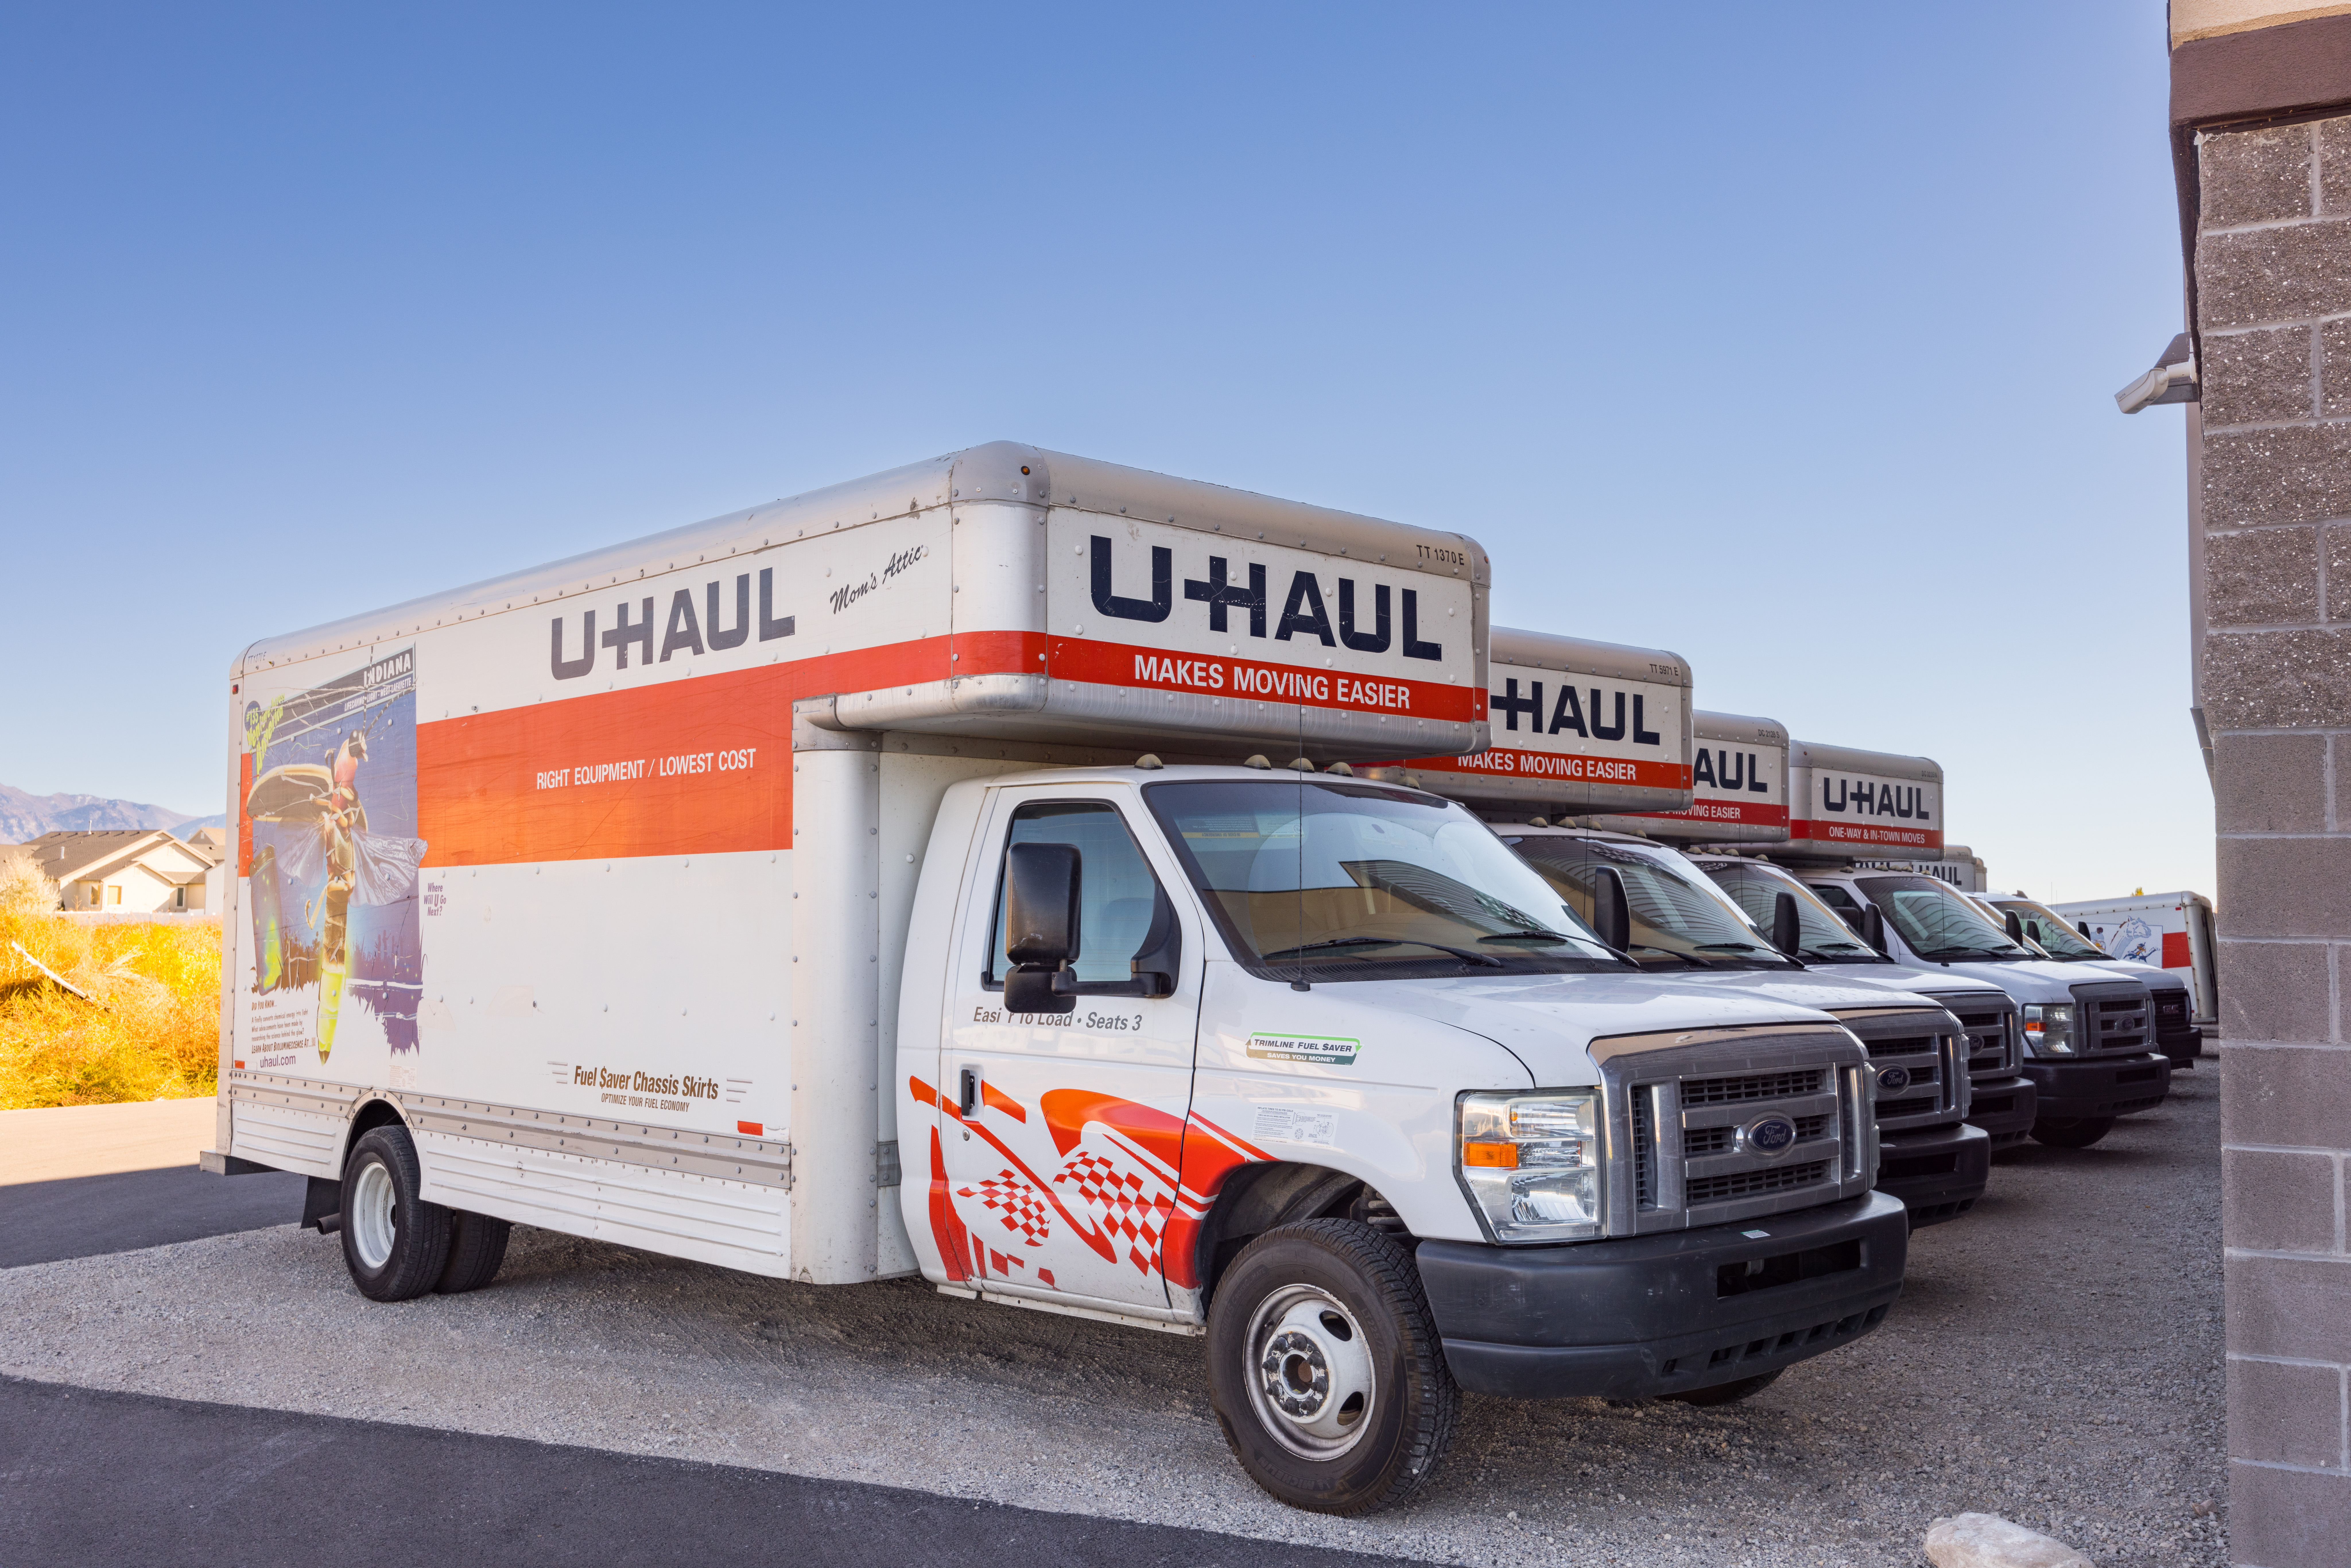 Lehi Indoor Storage Is An Authorized U-HAUL Dealer! - Lehi, UT 84043